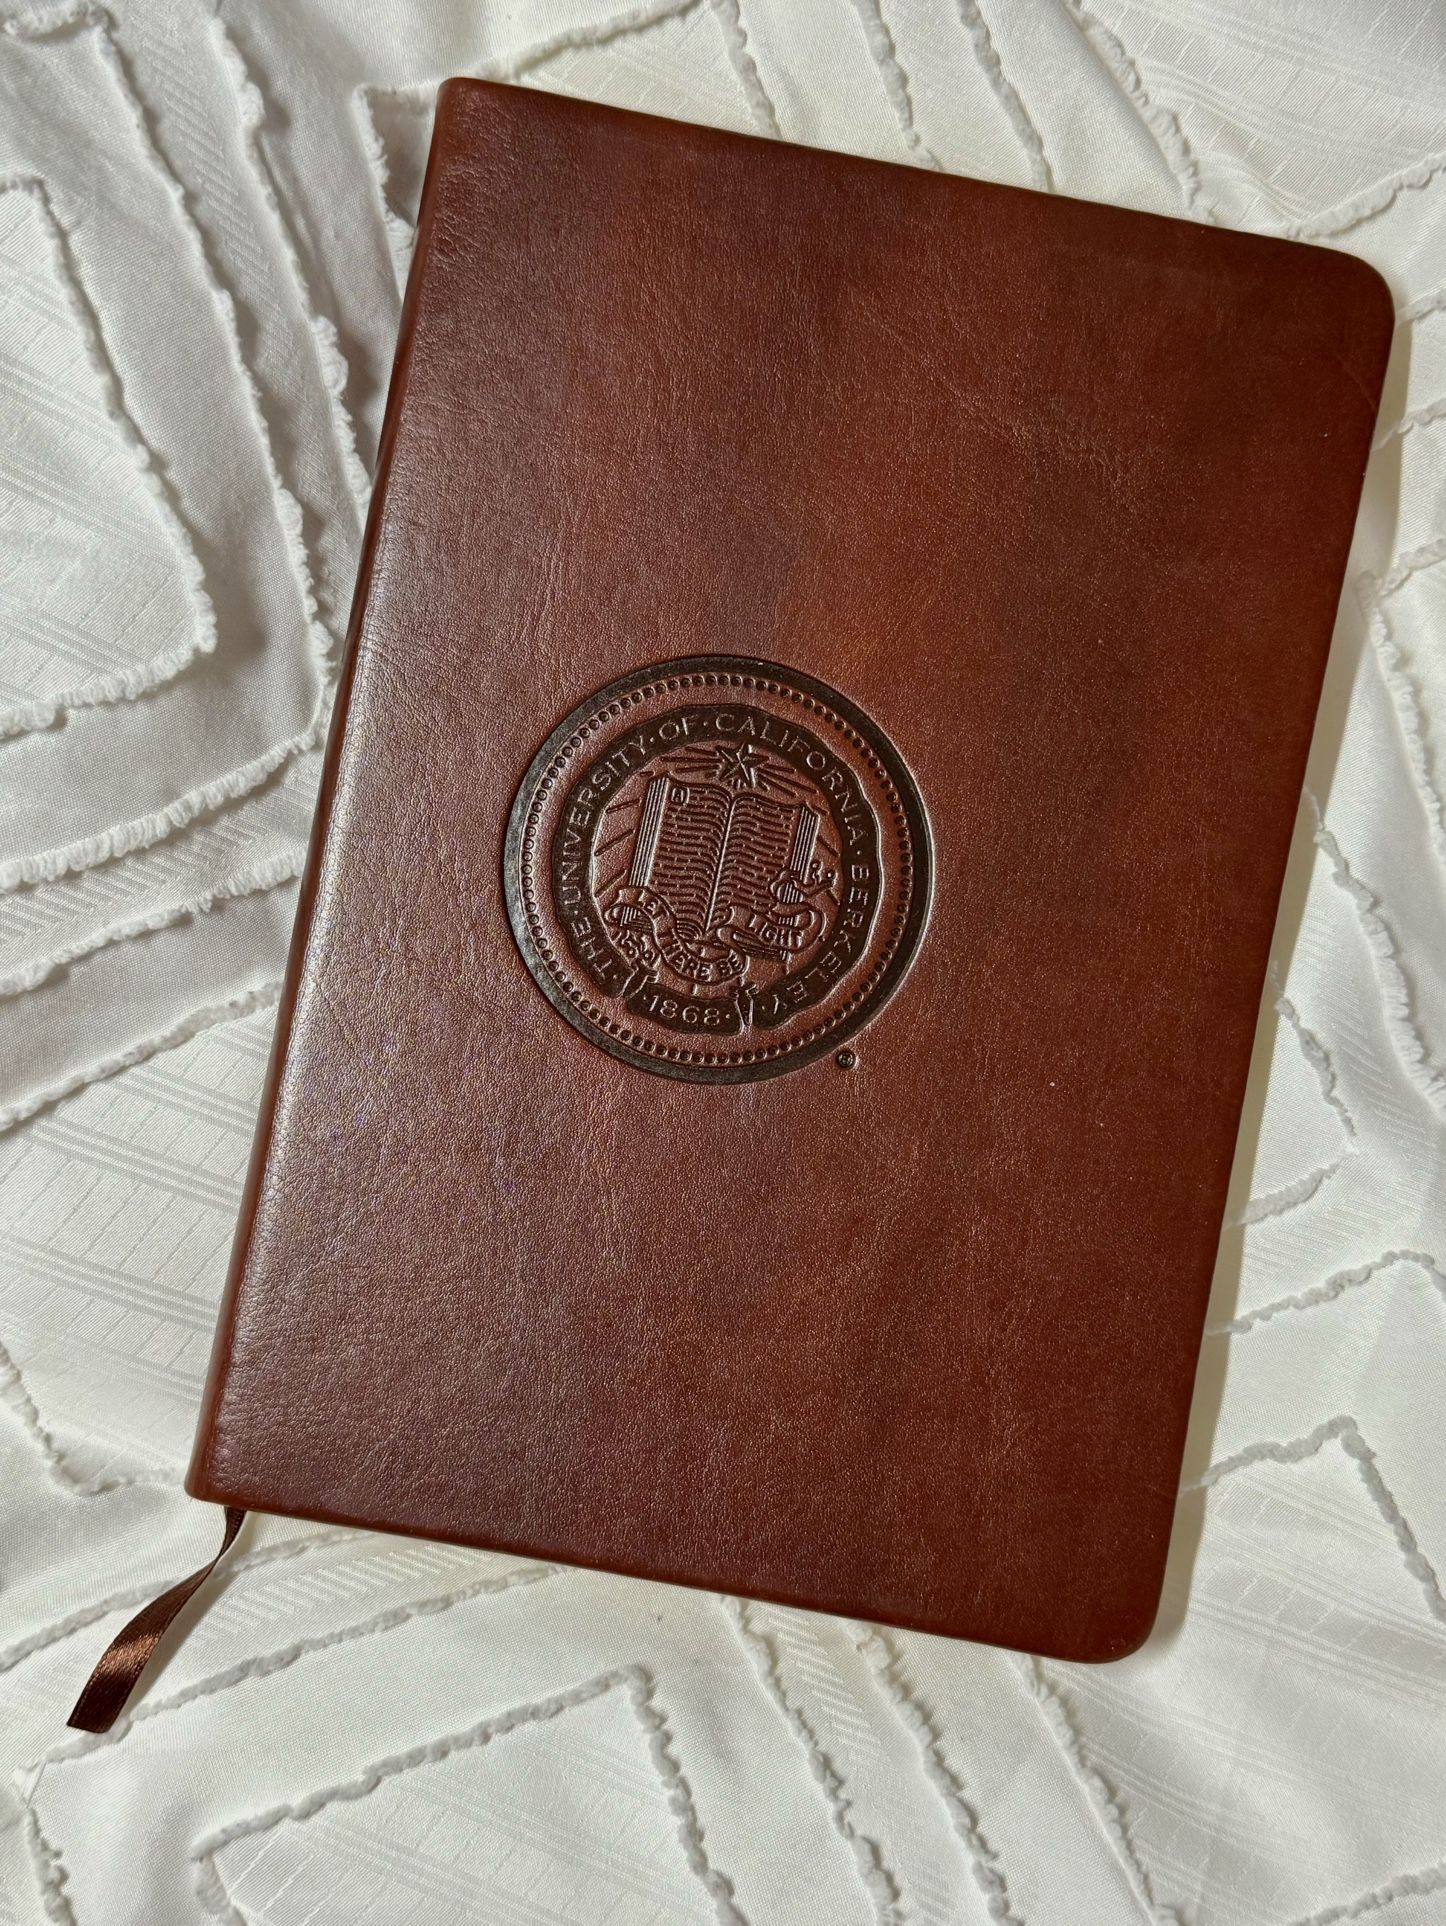 Genuine Leather UC Berkeley Journal Notebook